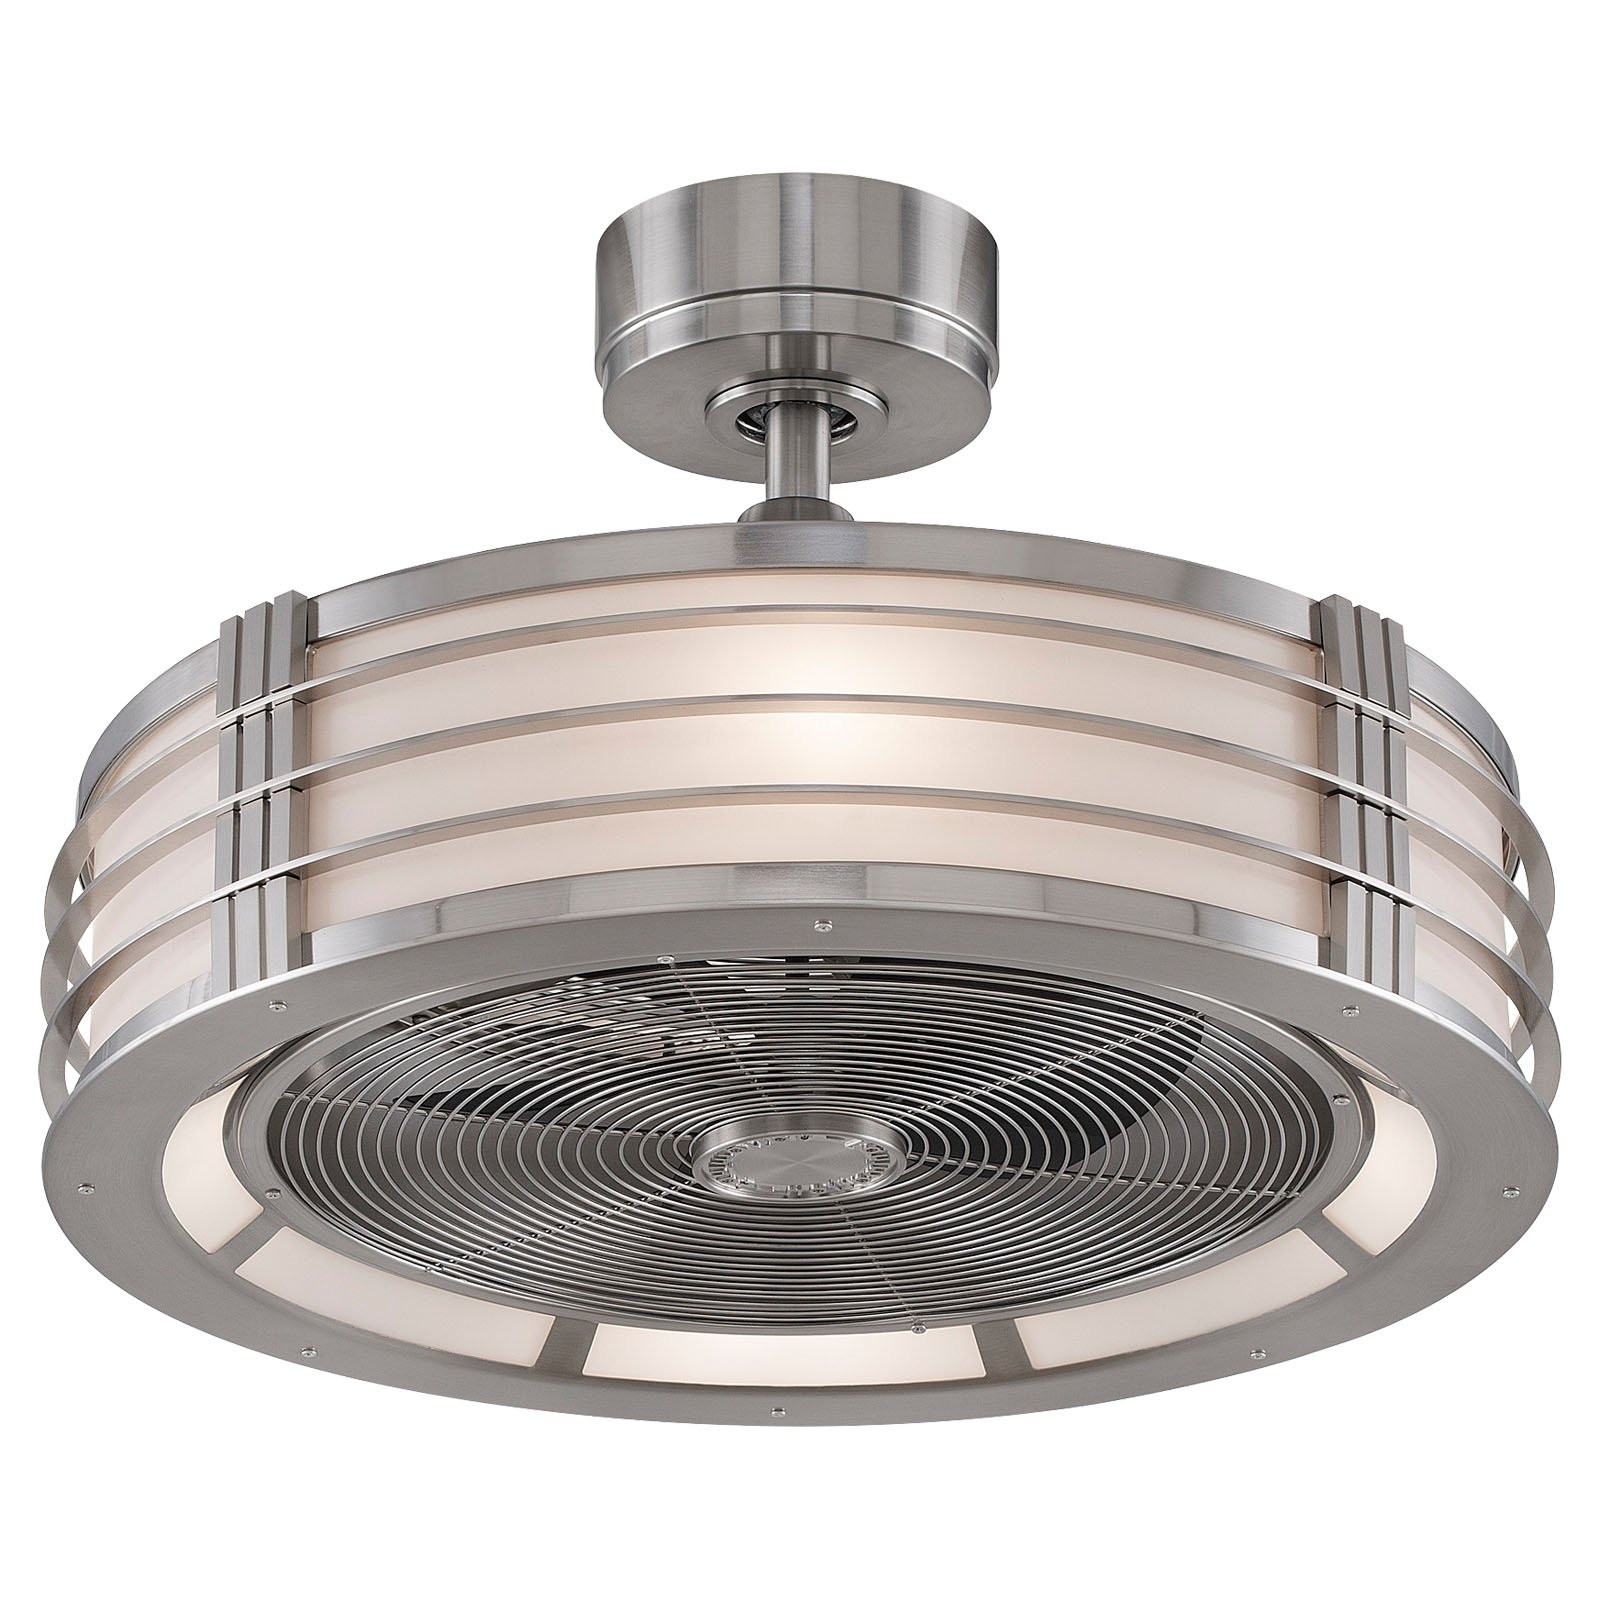 Bathroom Light And Fan
 10 adventiges of Small bathroom ceiling fans